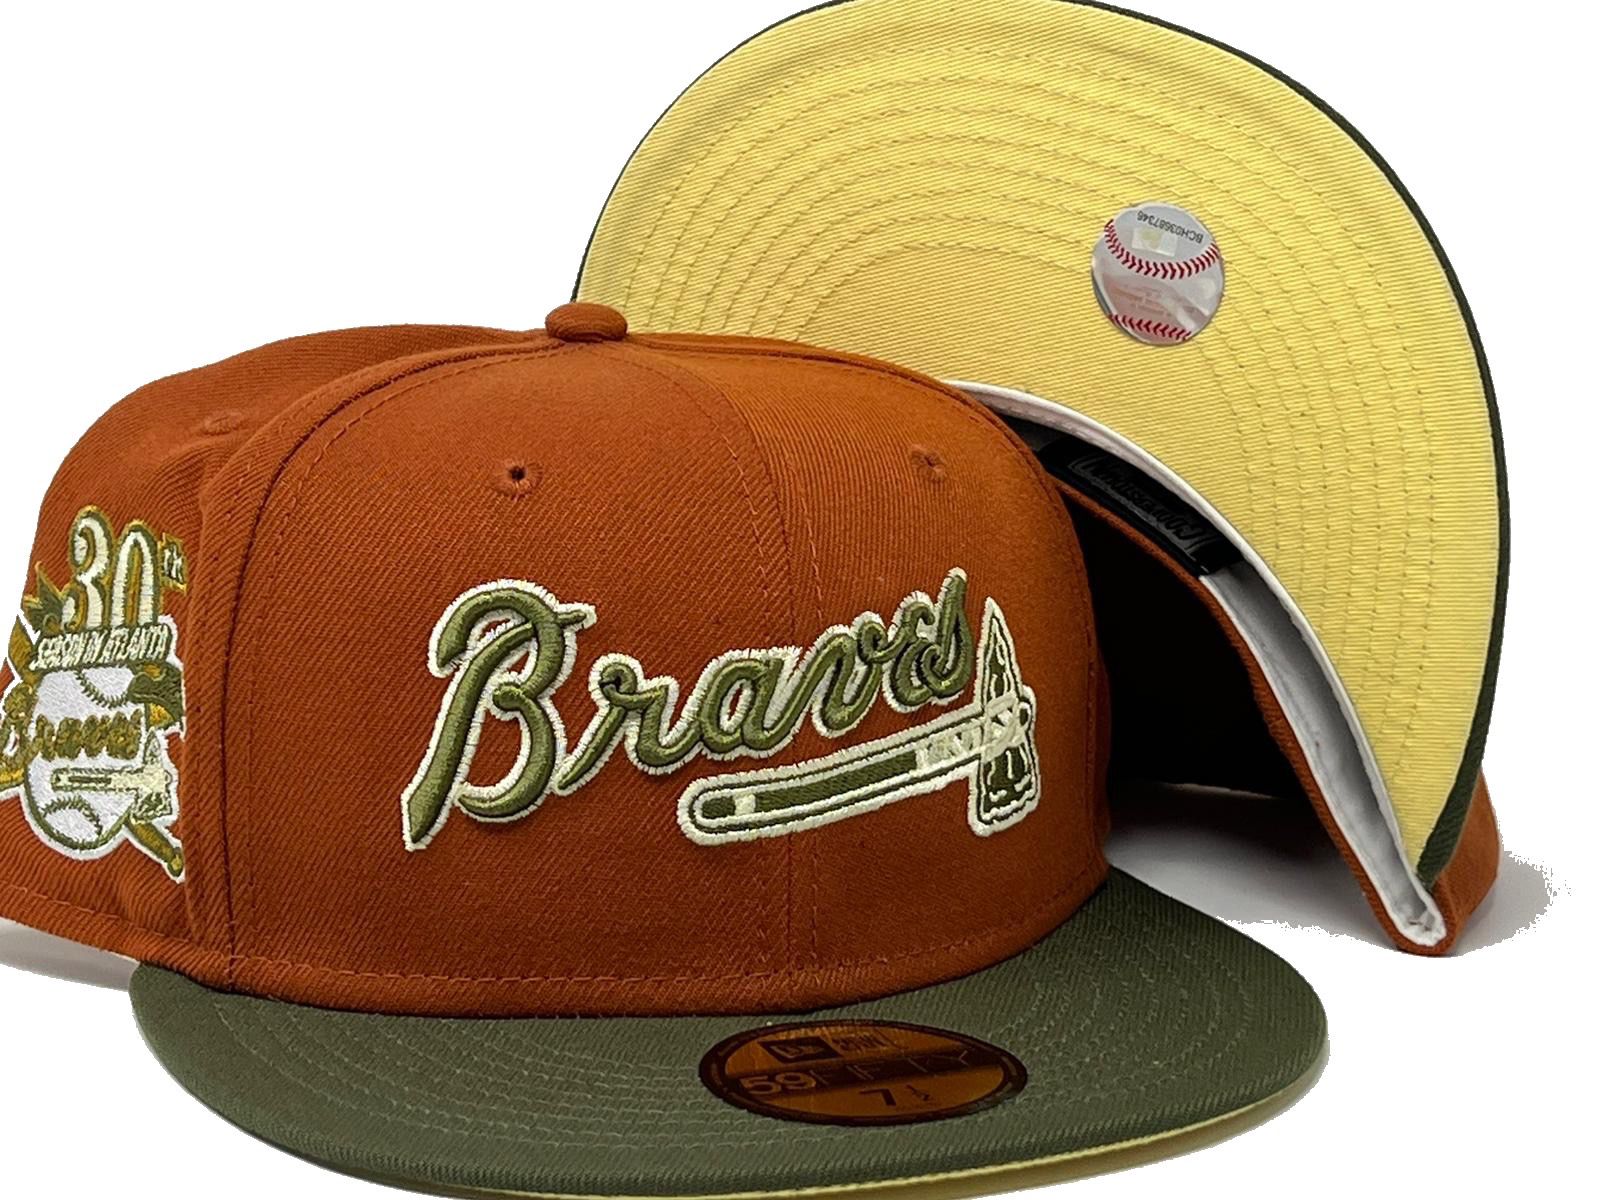 New Era Atlanta Braves Capsule Colors in Cream 30th Season Patch